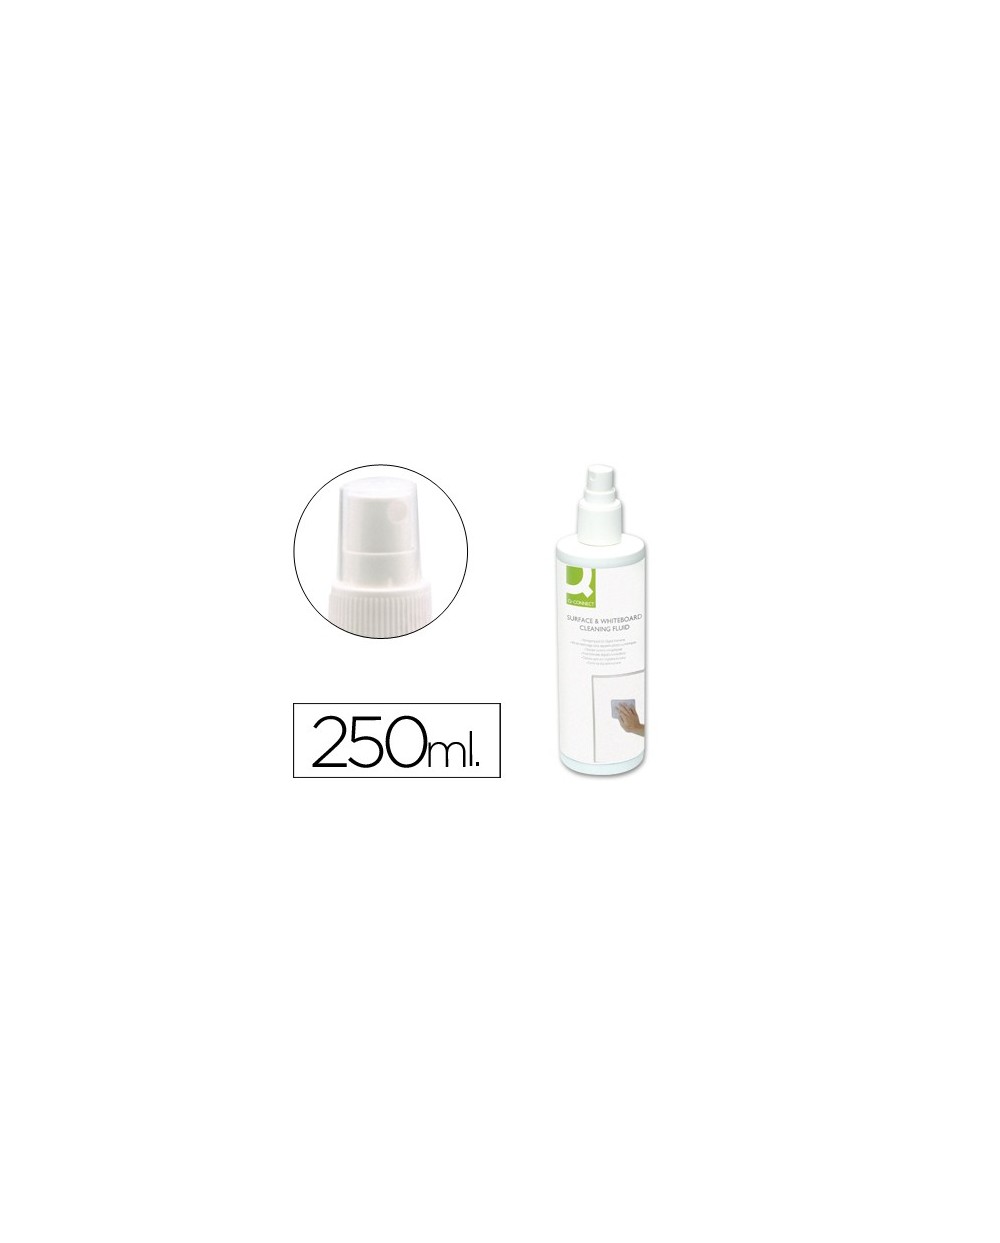 Spray q connect limpiador de pizarras blancas bote de 250 ml